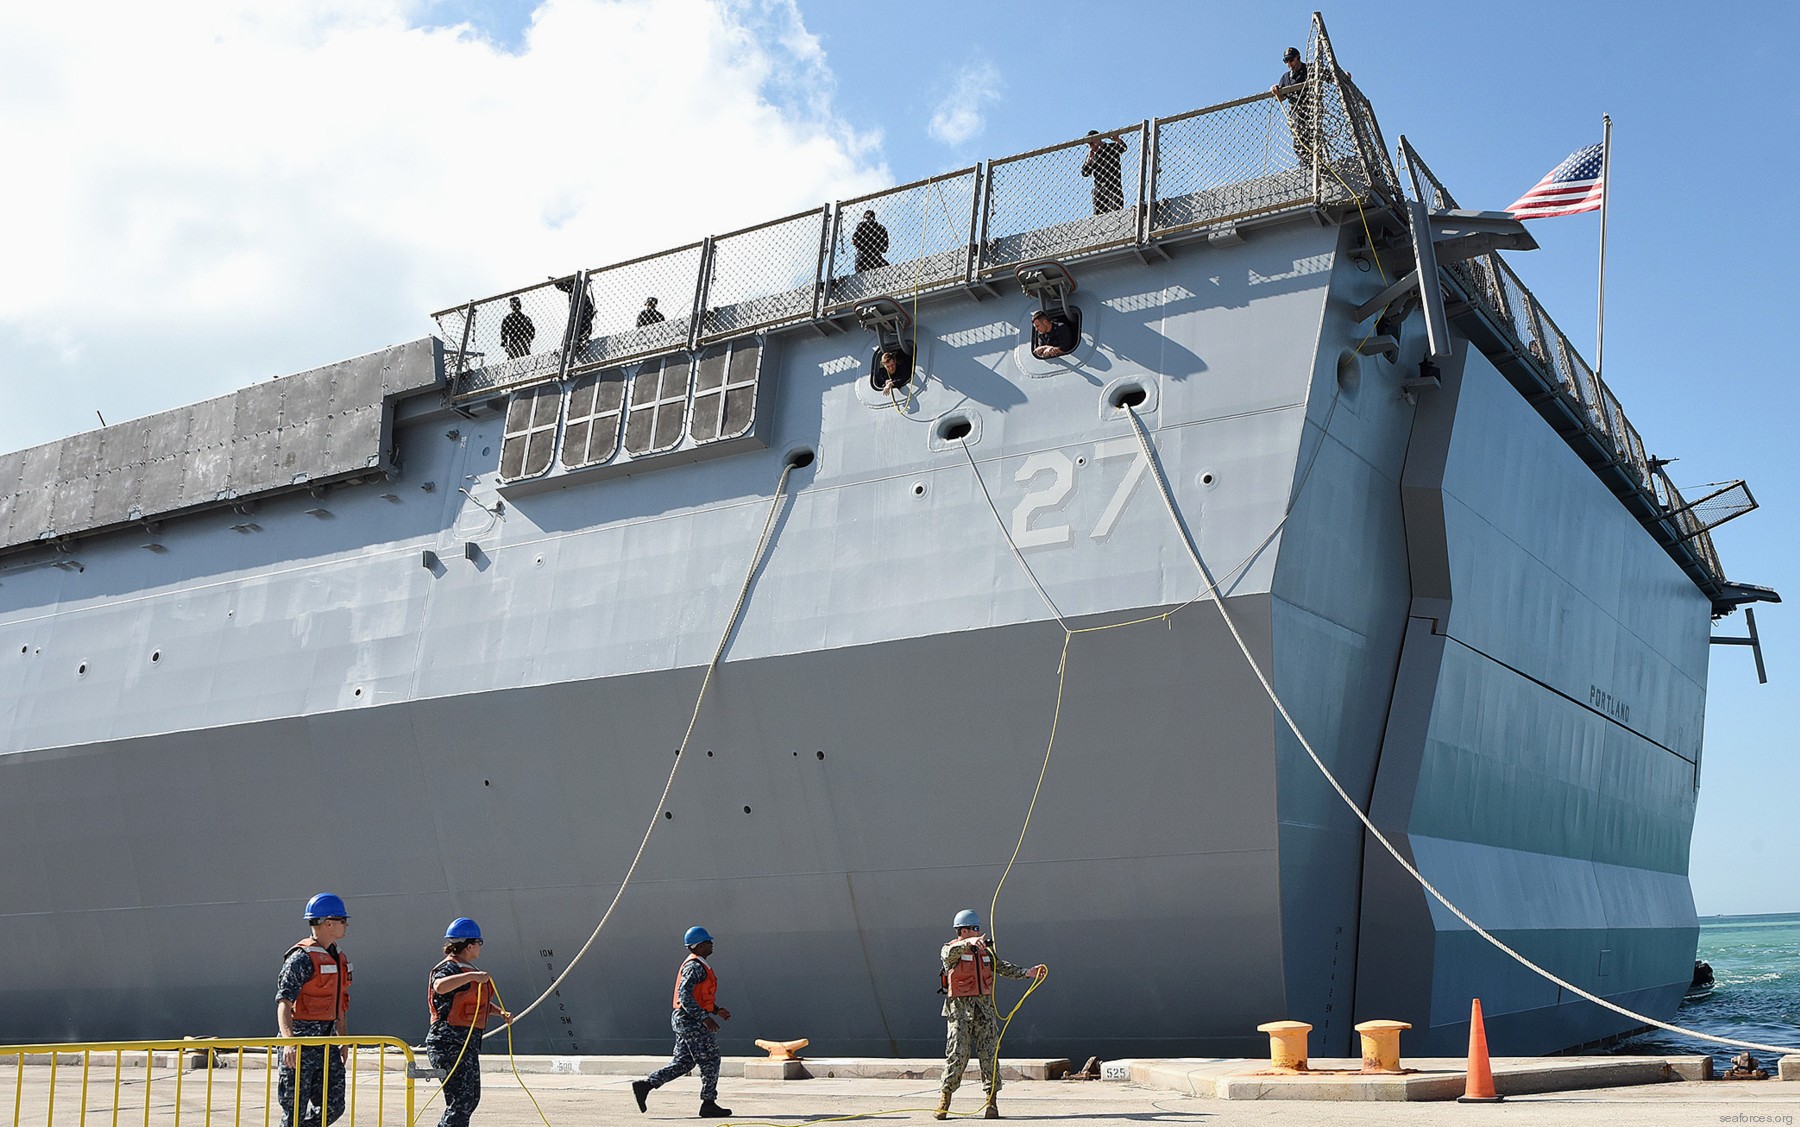 lpd-27 uss portland san antonio class amphibious transport dock ship navy 19